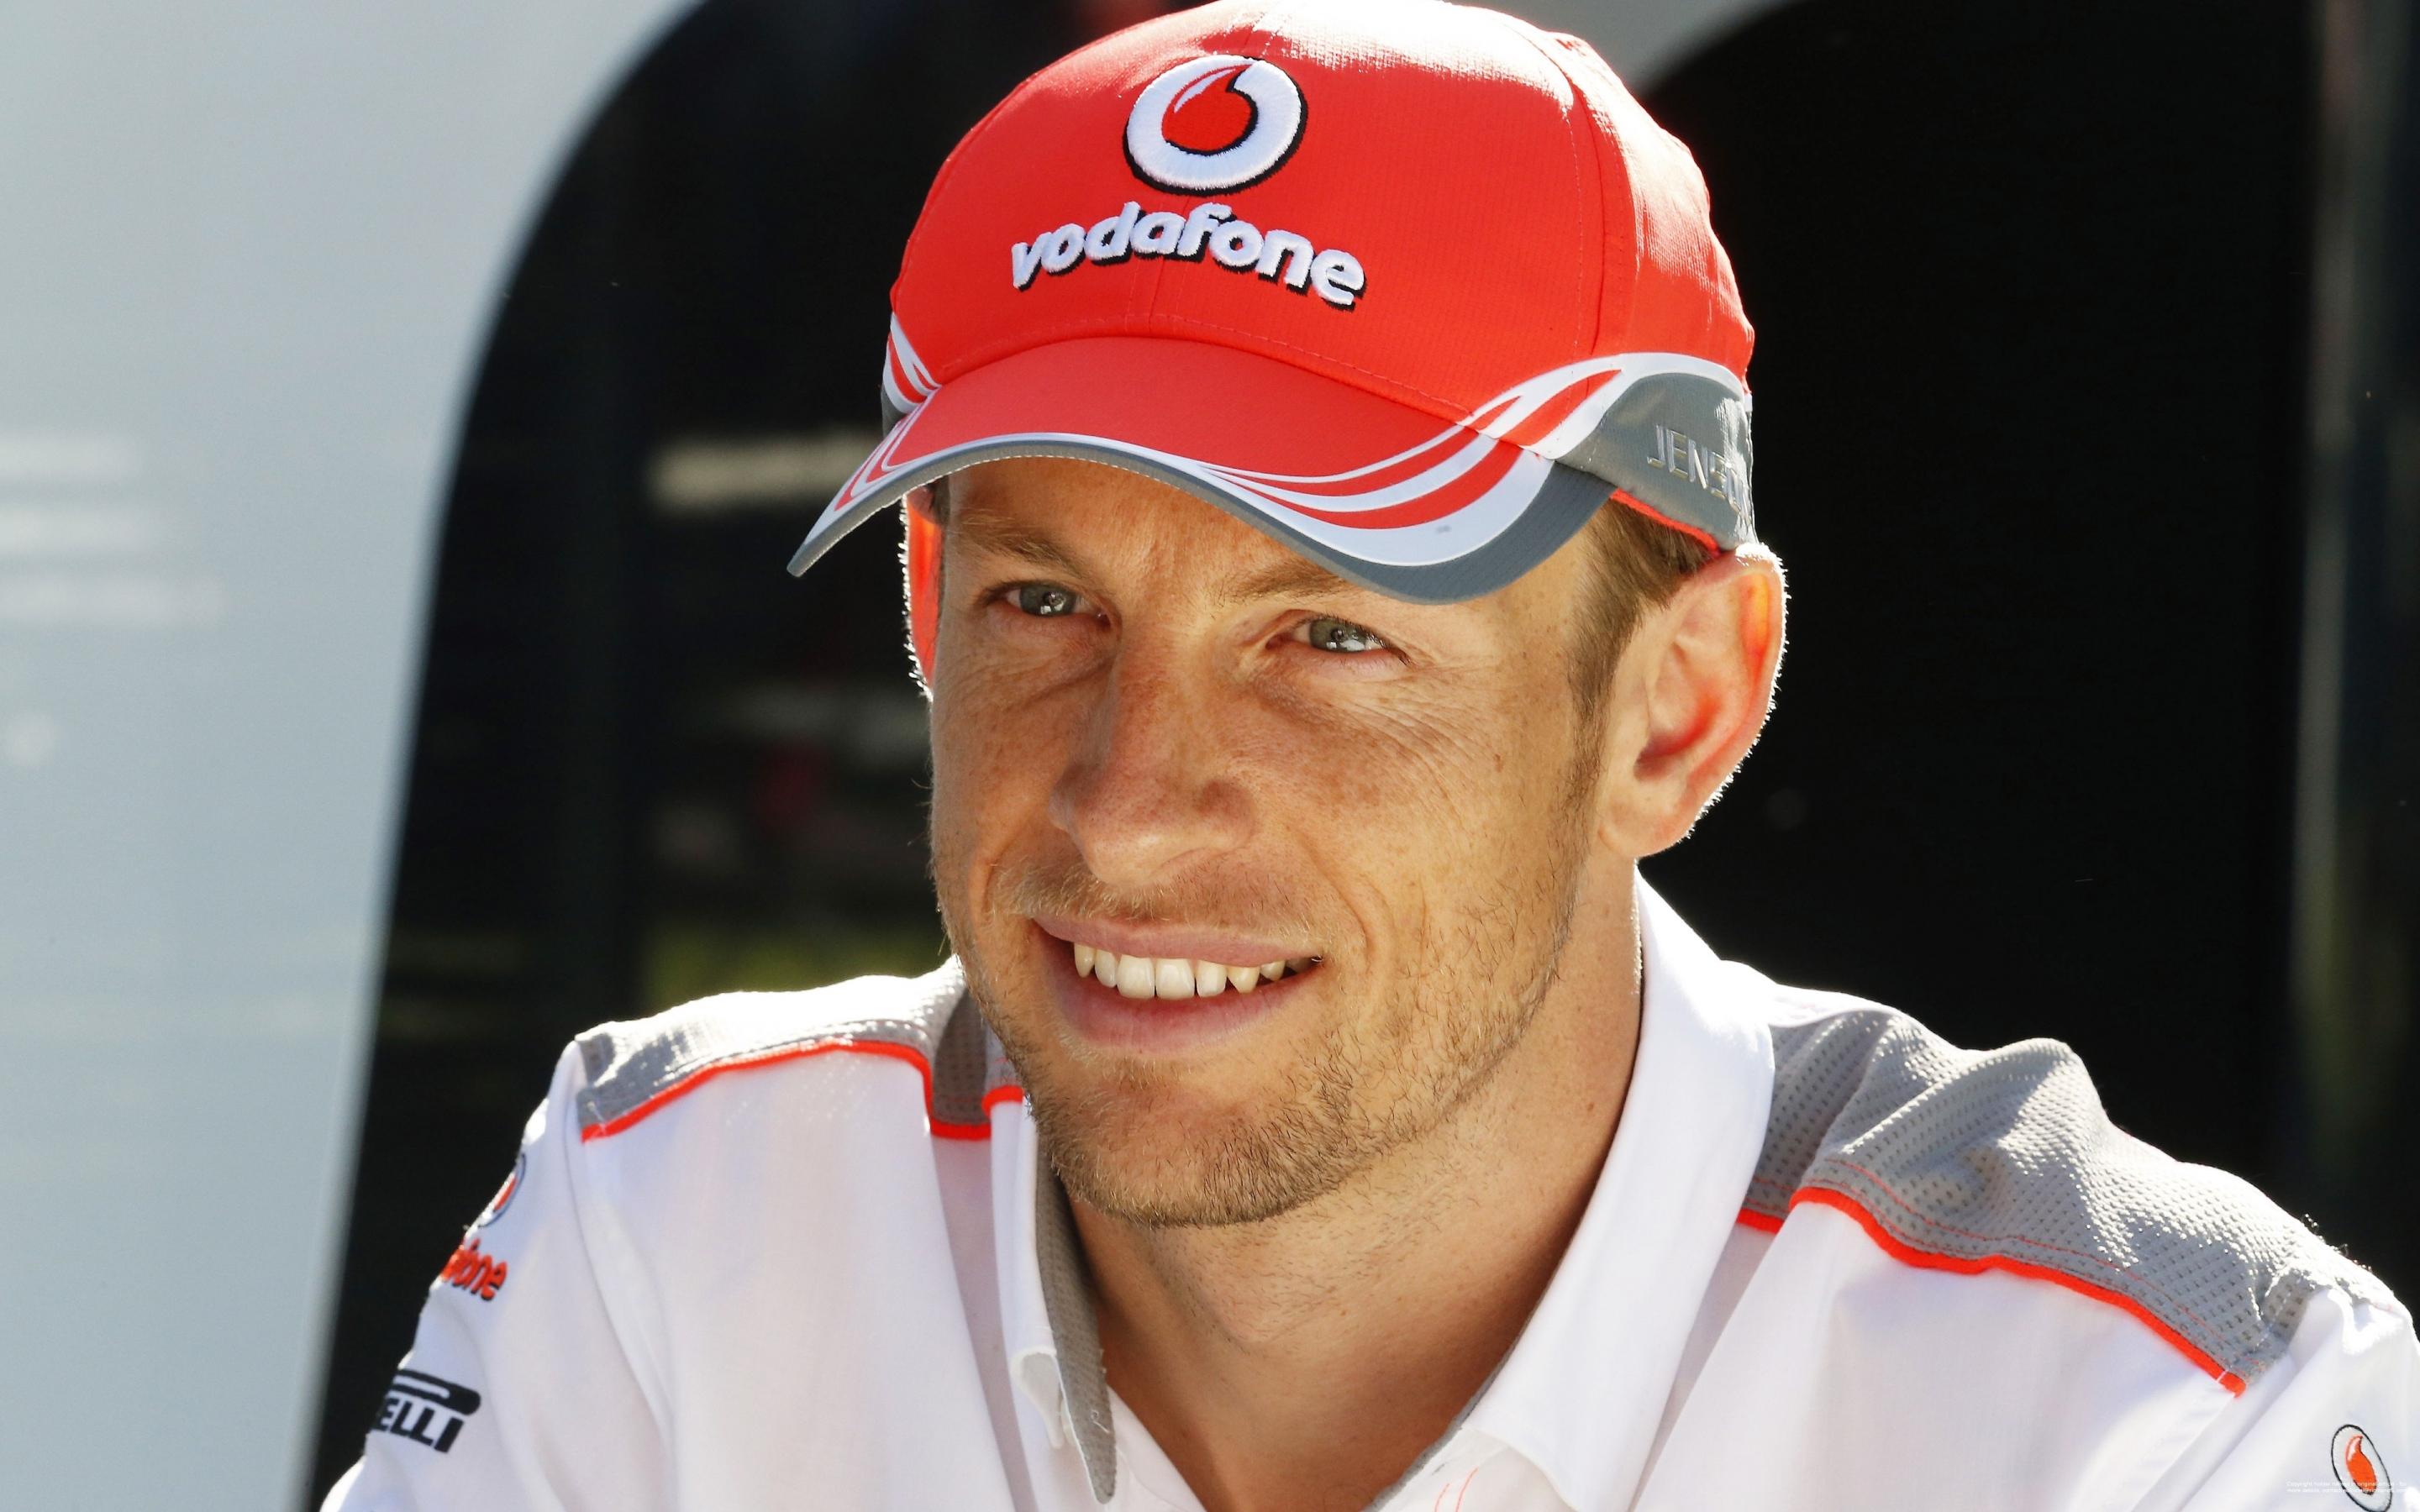 Jenson Button Vodafone for 2880 x 1800 Retina Display resolution